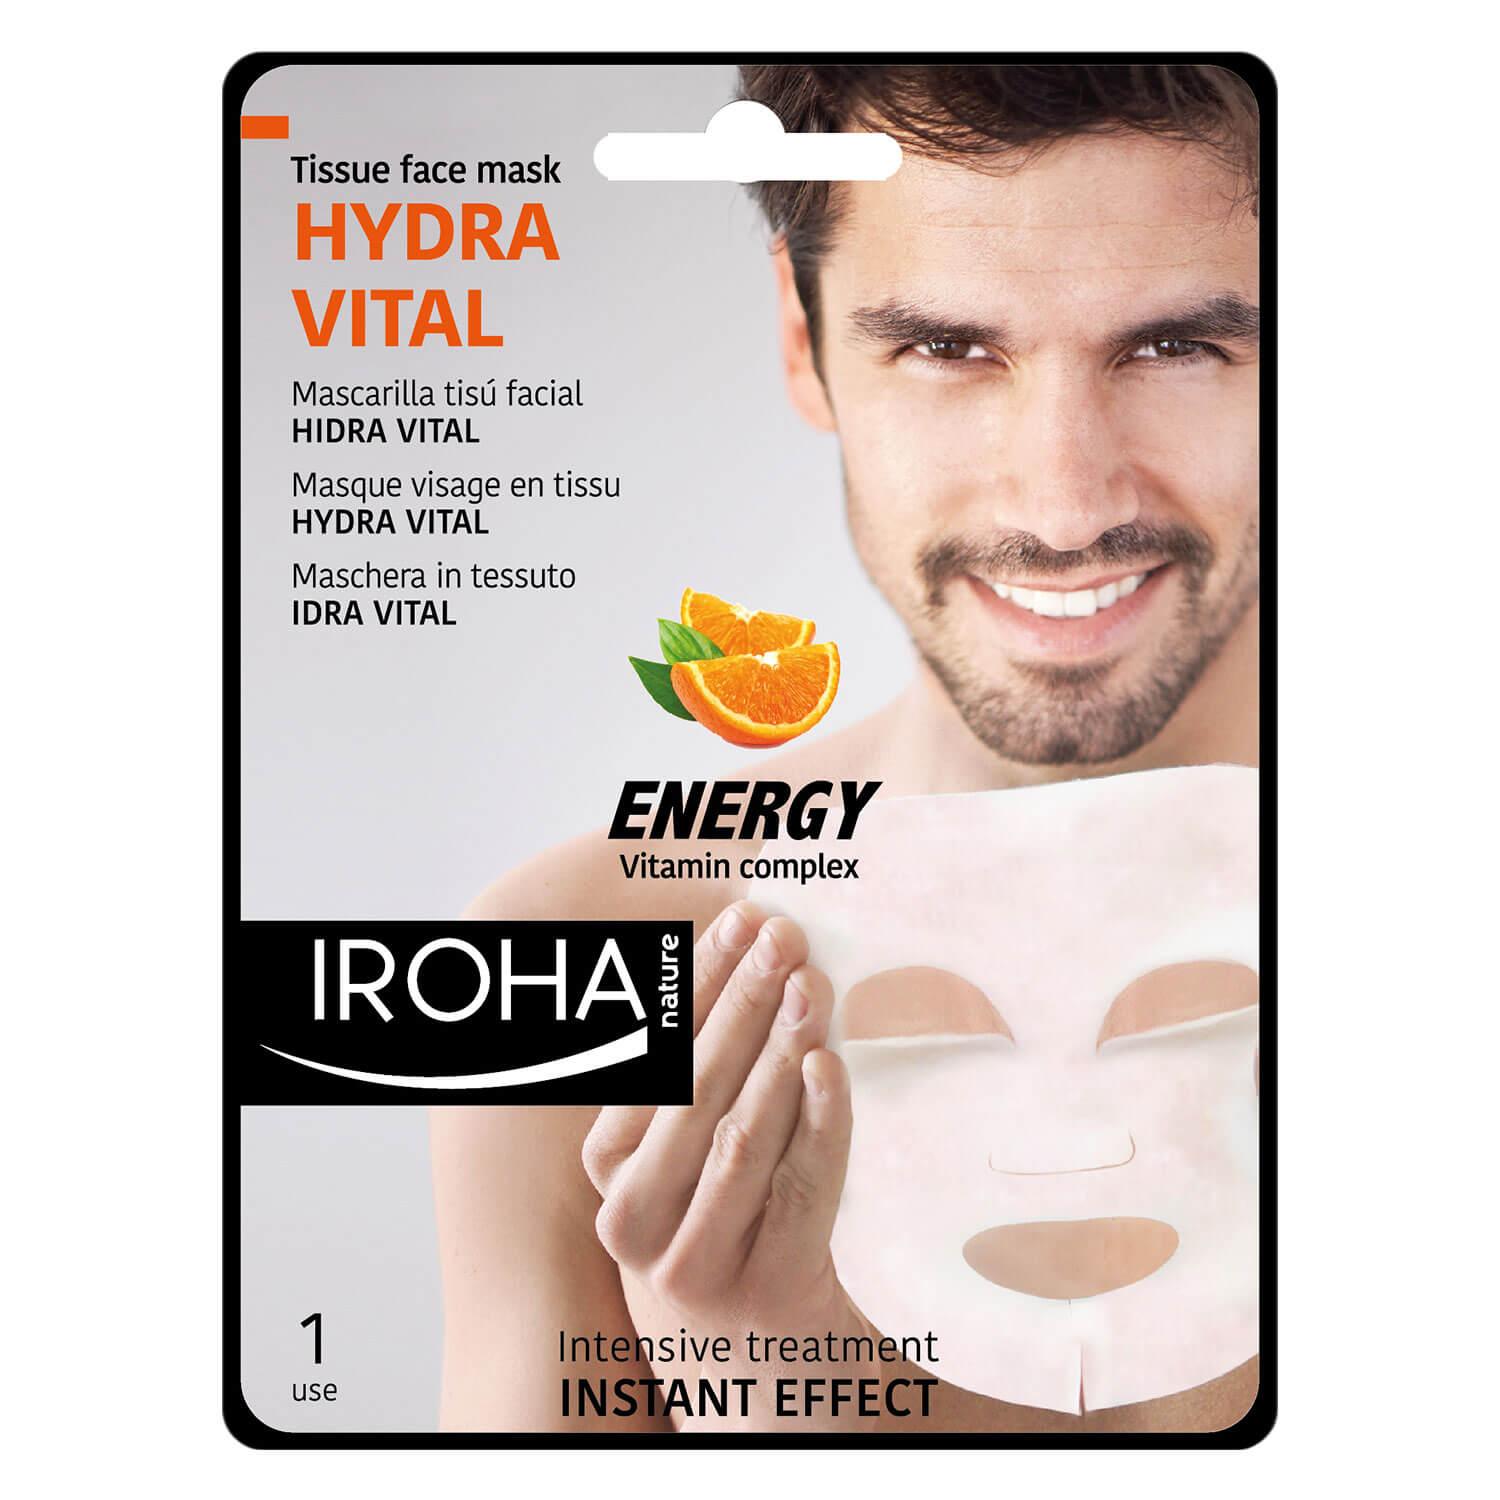 Iroha Nature - Tissue Face Mask Hydra Vital - Energy Vitamin Complex